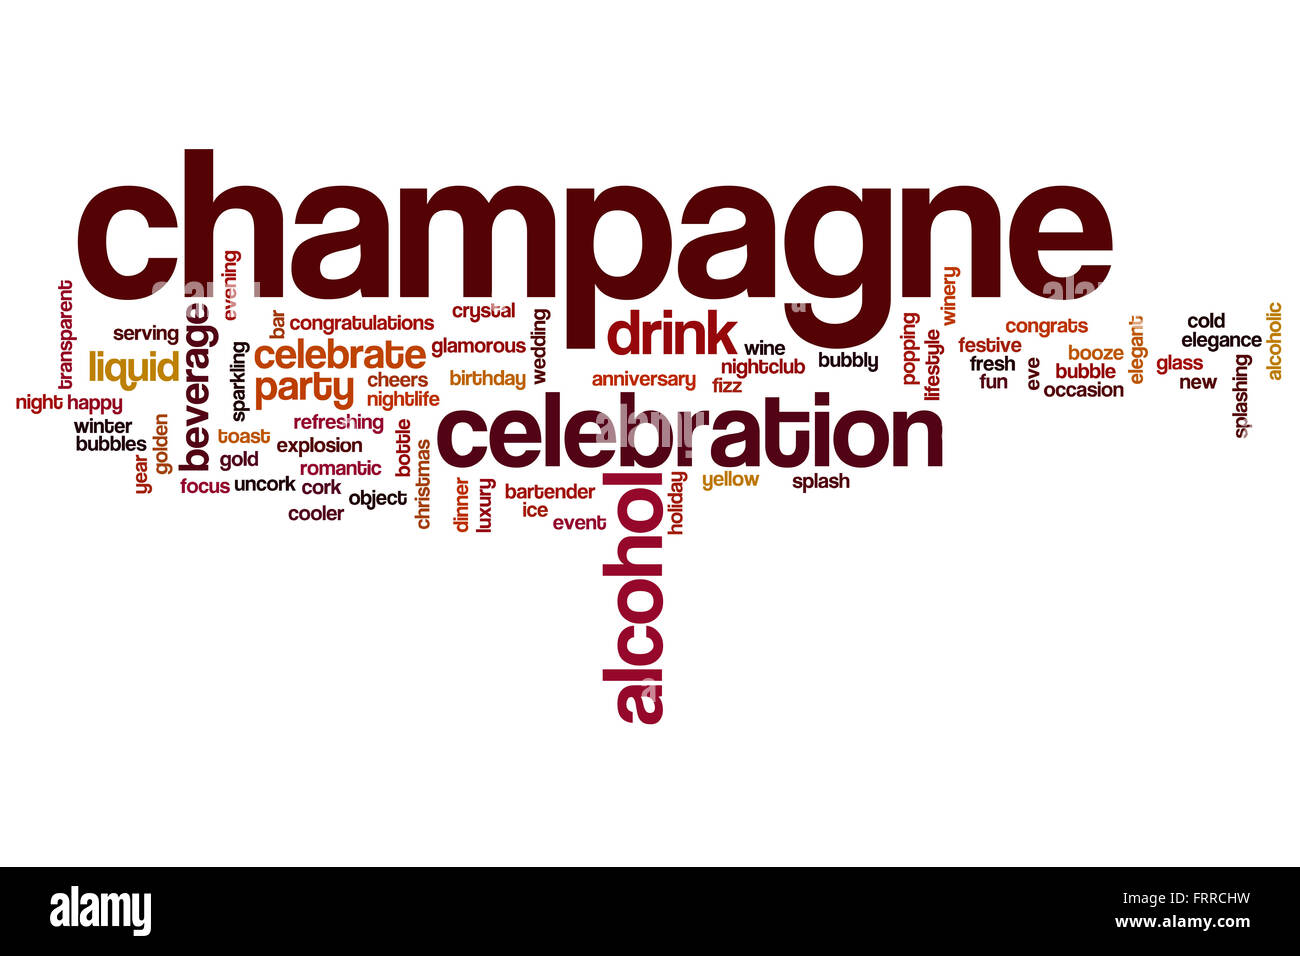 Champagne palabra nube concepto con alcohol beber tags relacionados Foto de stock